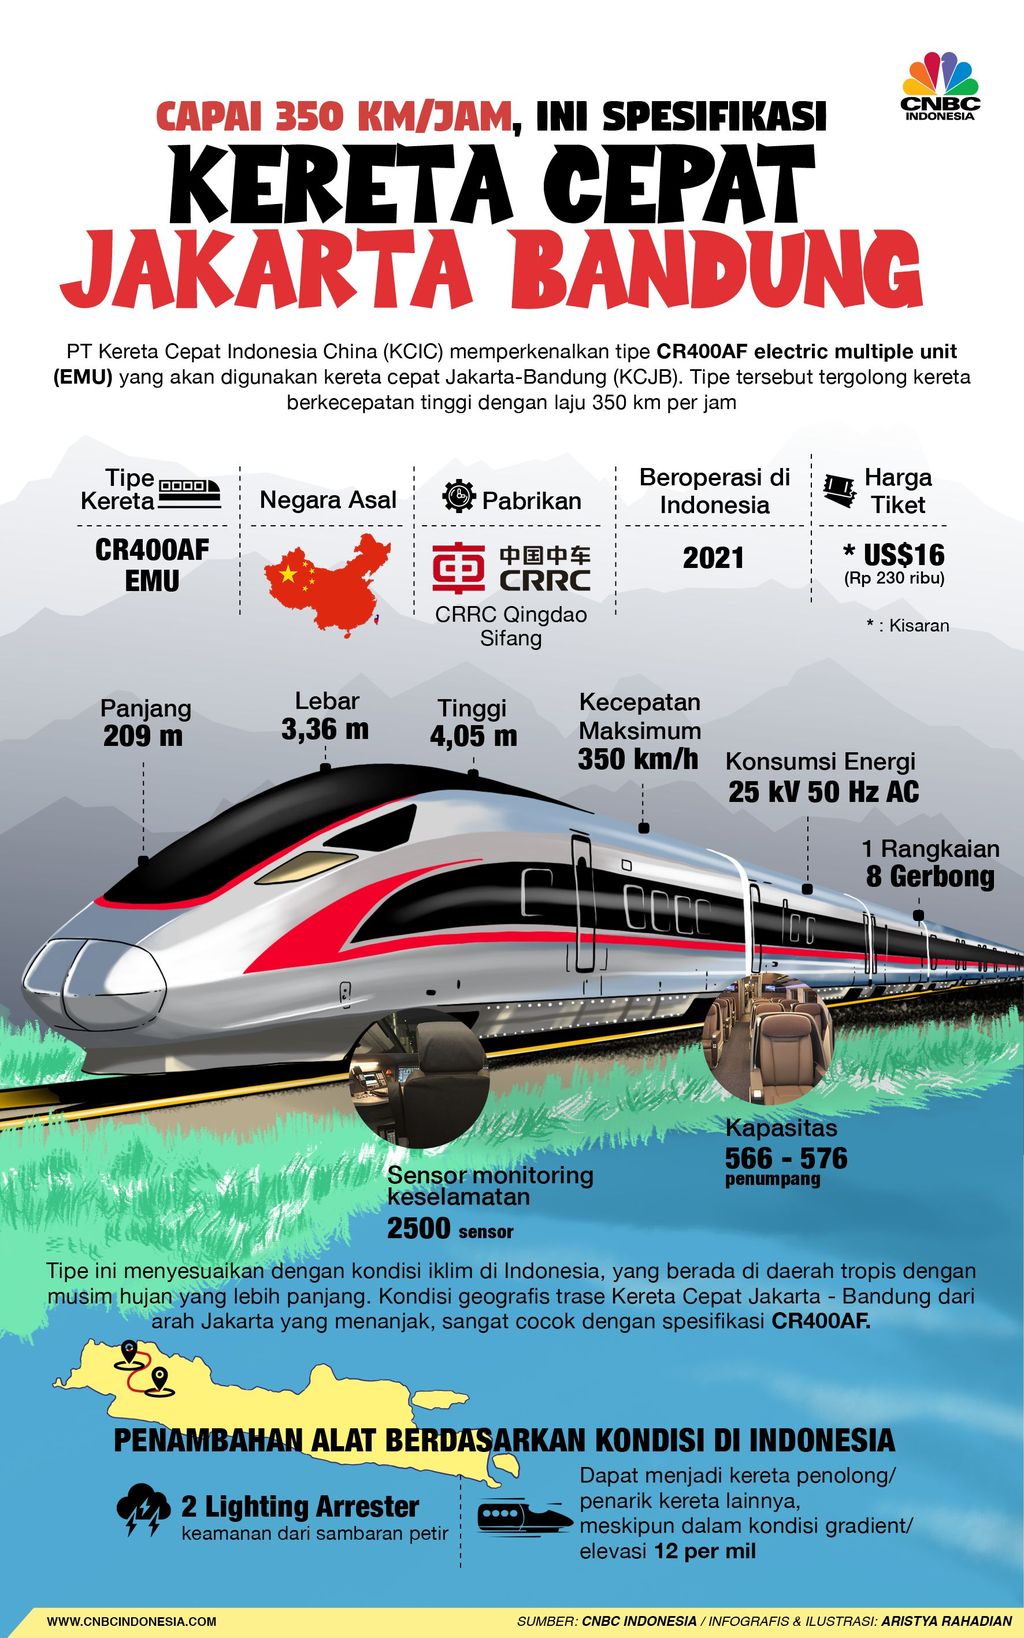 Infografis: Capai 350km/jam, ini spesifikasinya Kereta Cepat jakarta-bandung